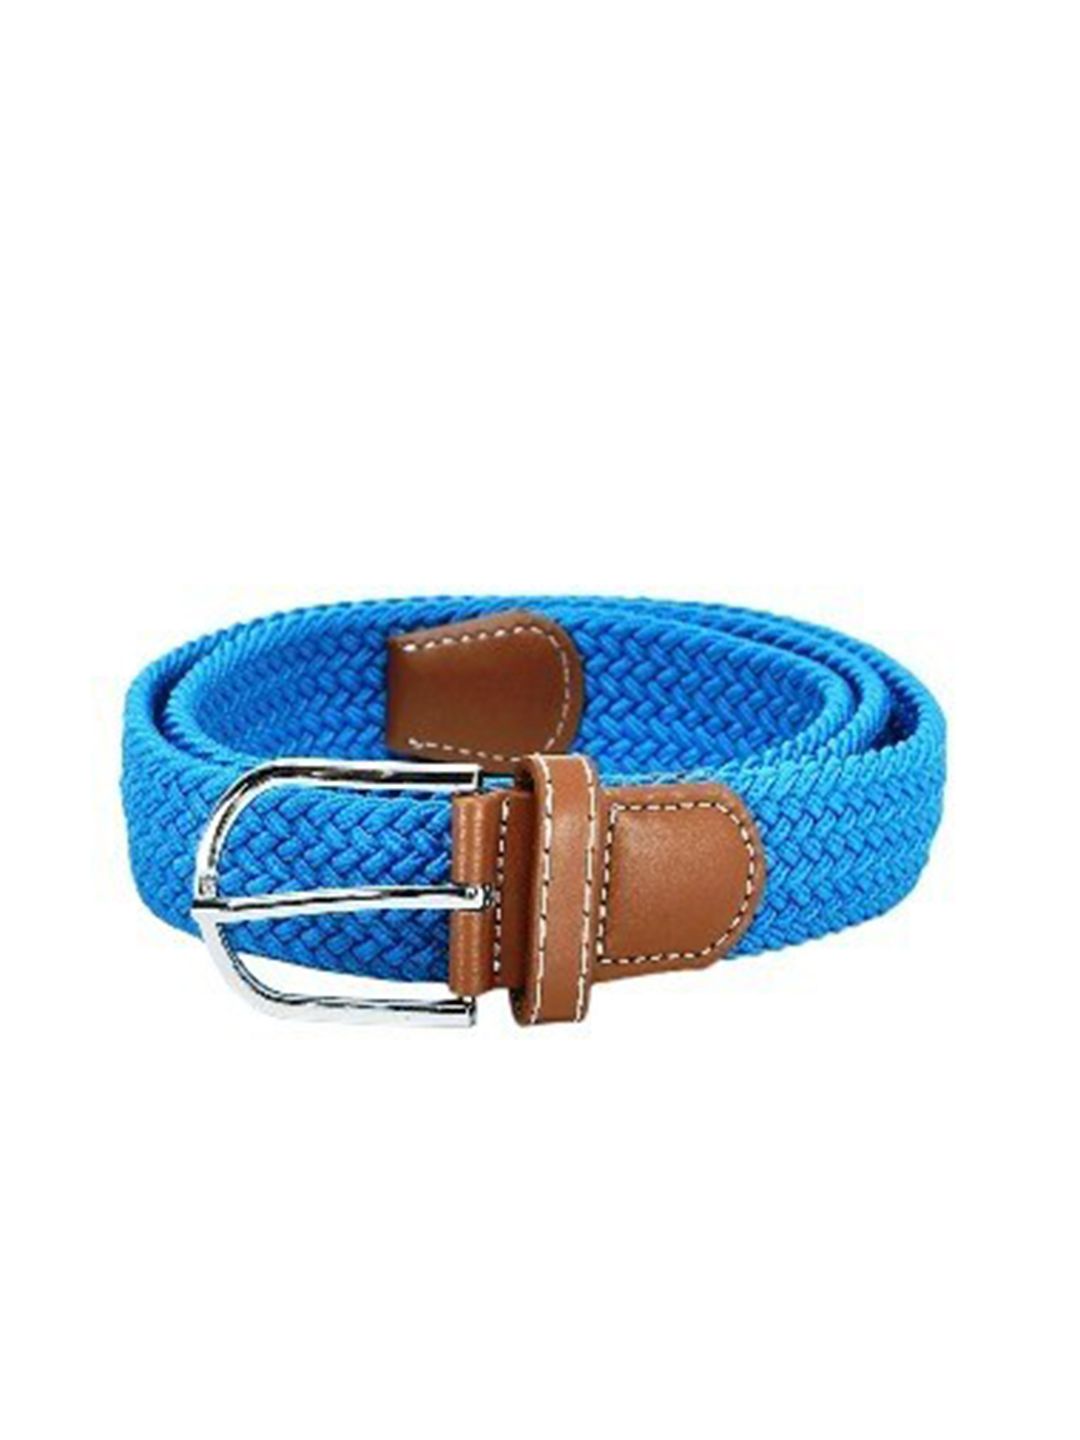 Kastner Unisex Blue Braided Stretchable Canvas Belt Price in India